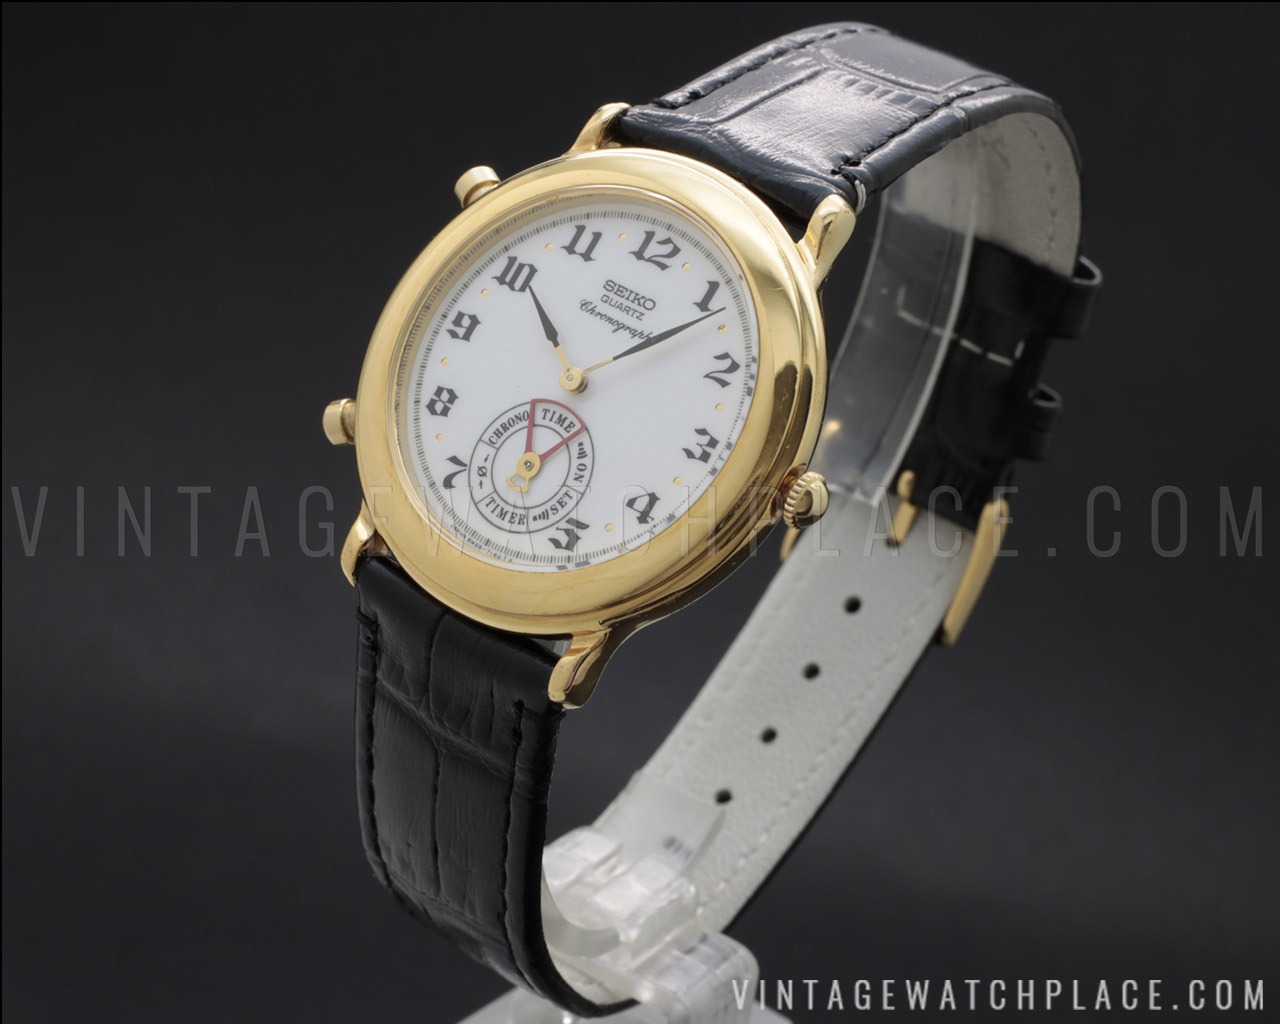 New Old Stock dress Seiko Quartz Chronograph vintage watch, 8M25 